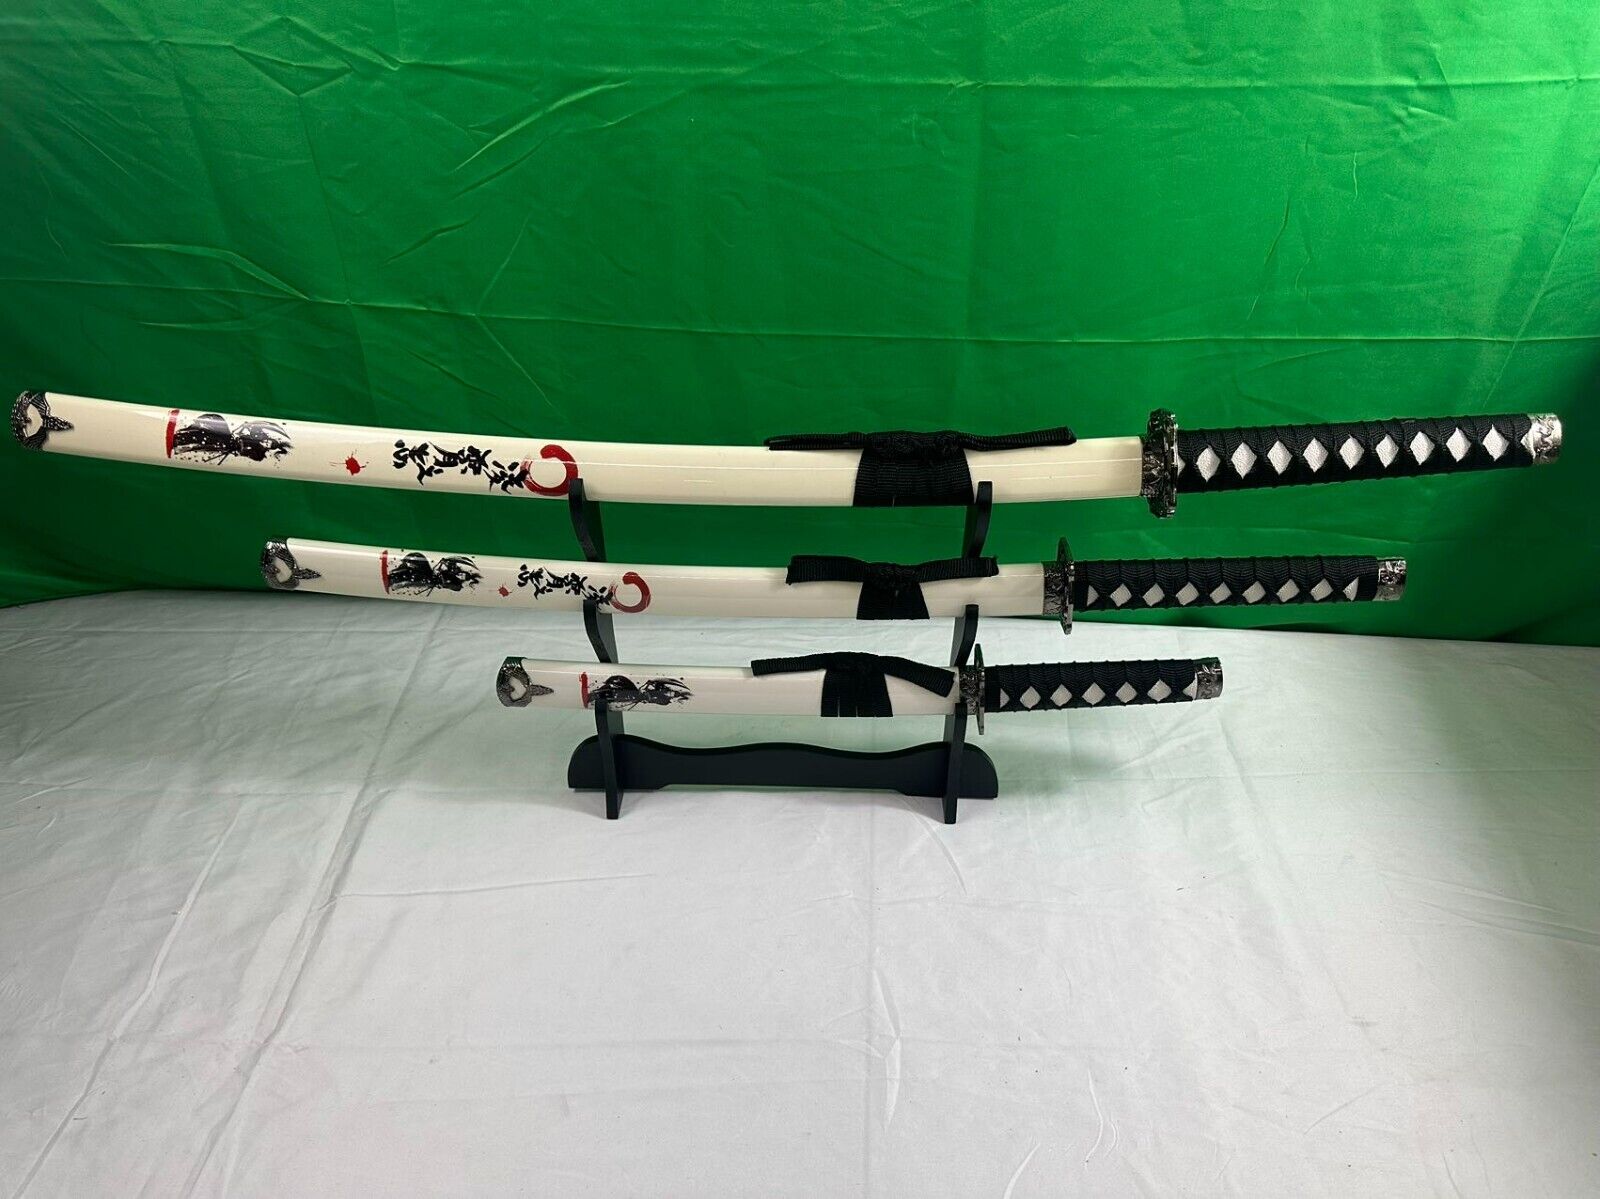 3pc Red Japanese Samurai Katana Sword Set w/ Stand Blade Weapon Collection Decor